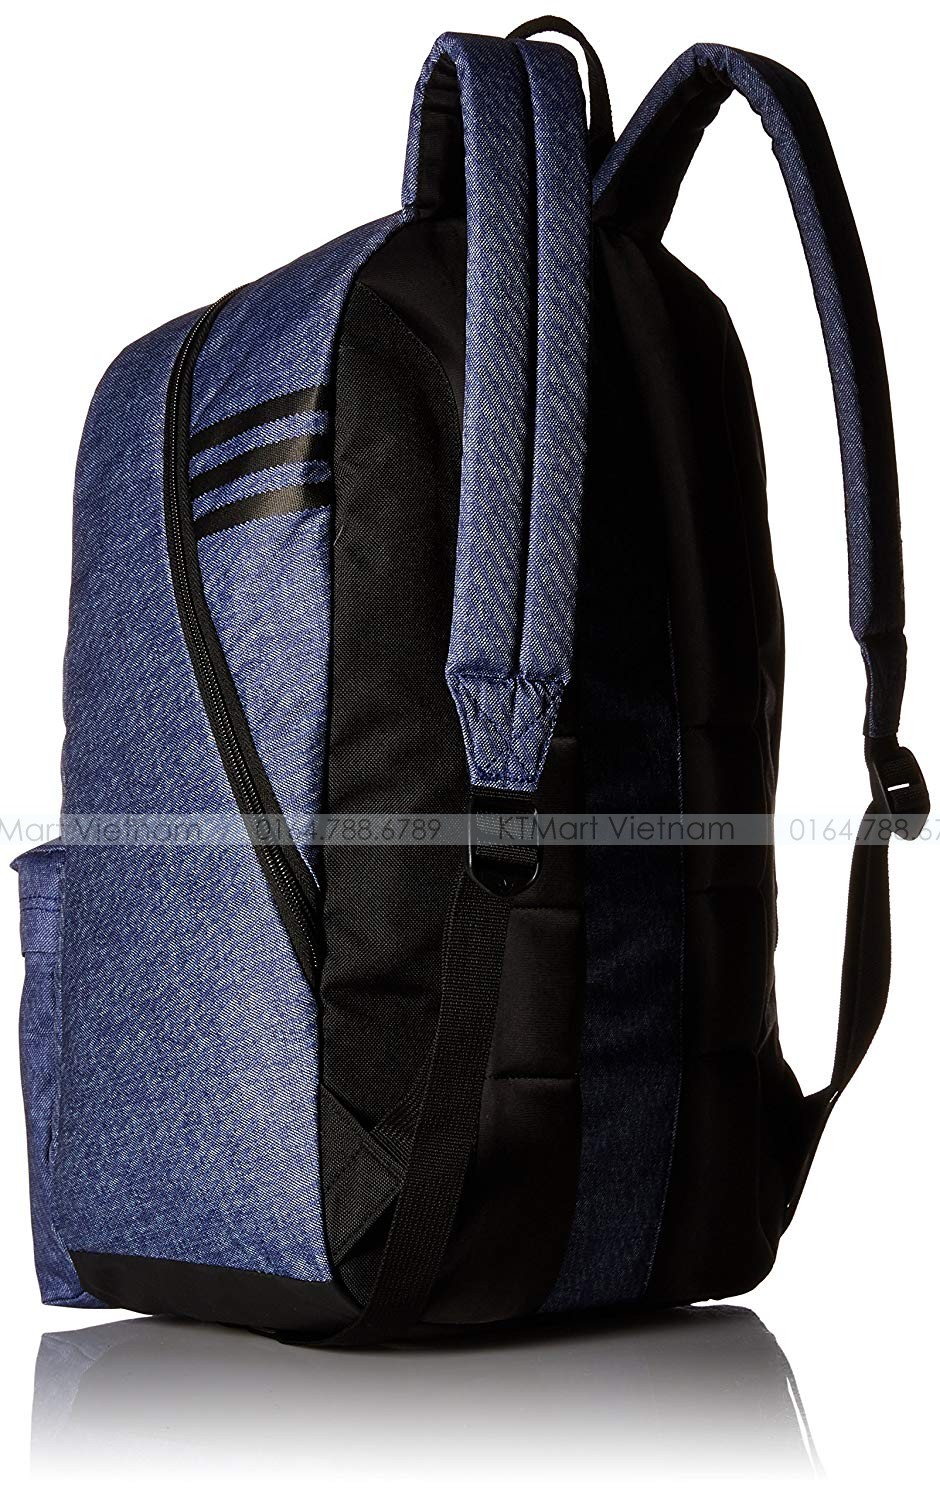 Adidas Originals National Backpack Adidas ktmart.vn 18